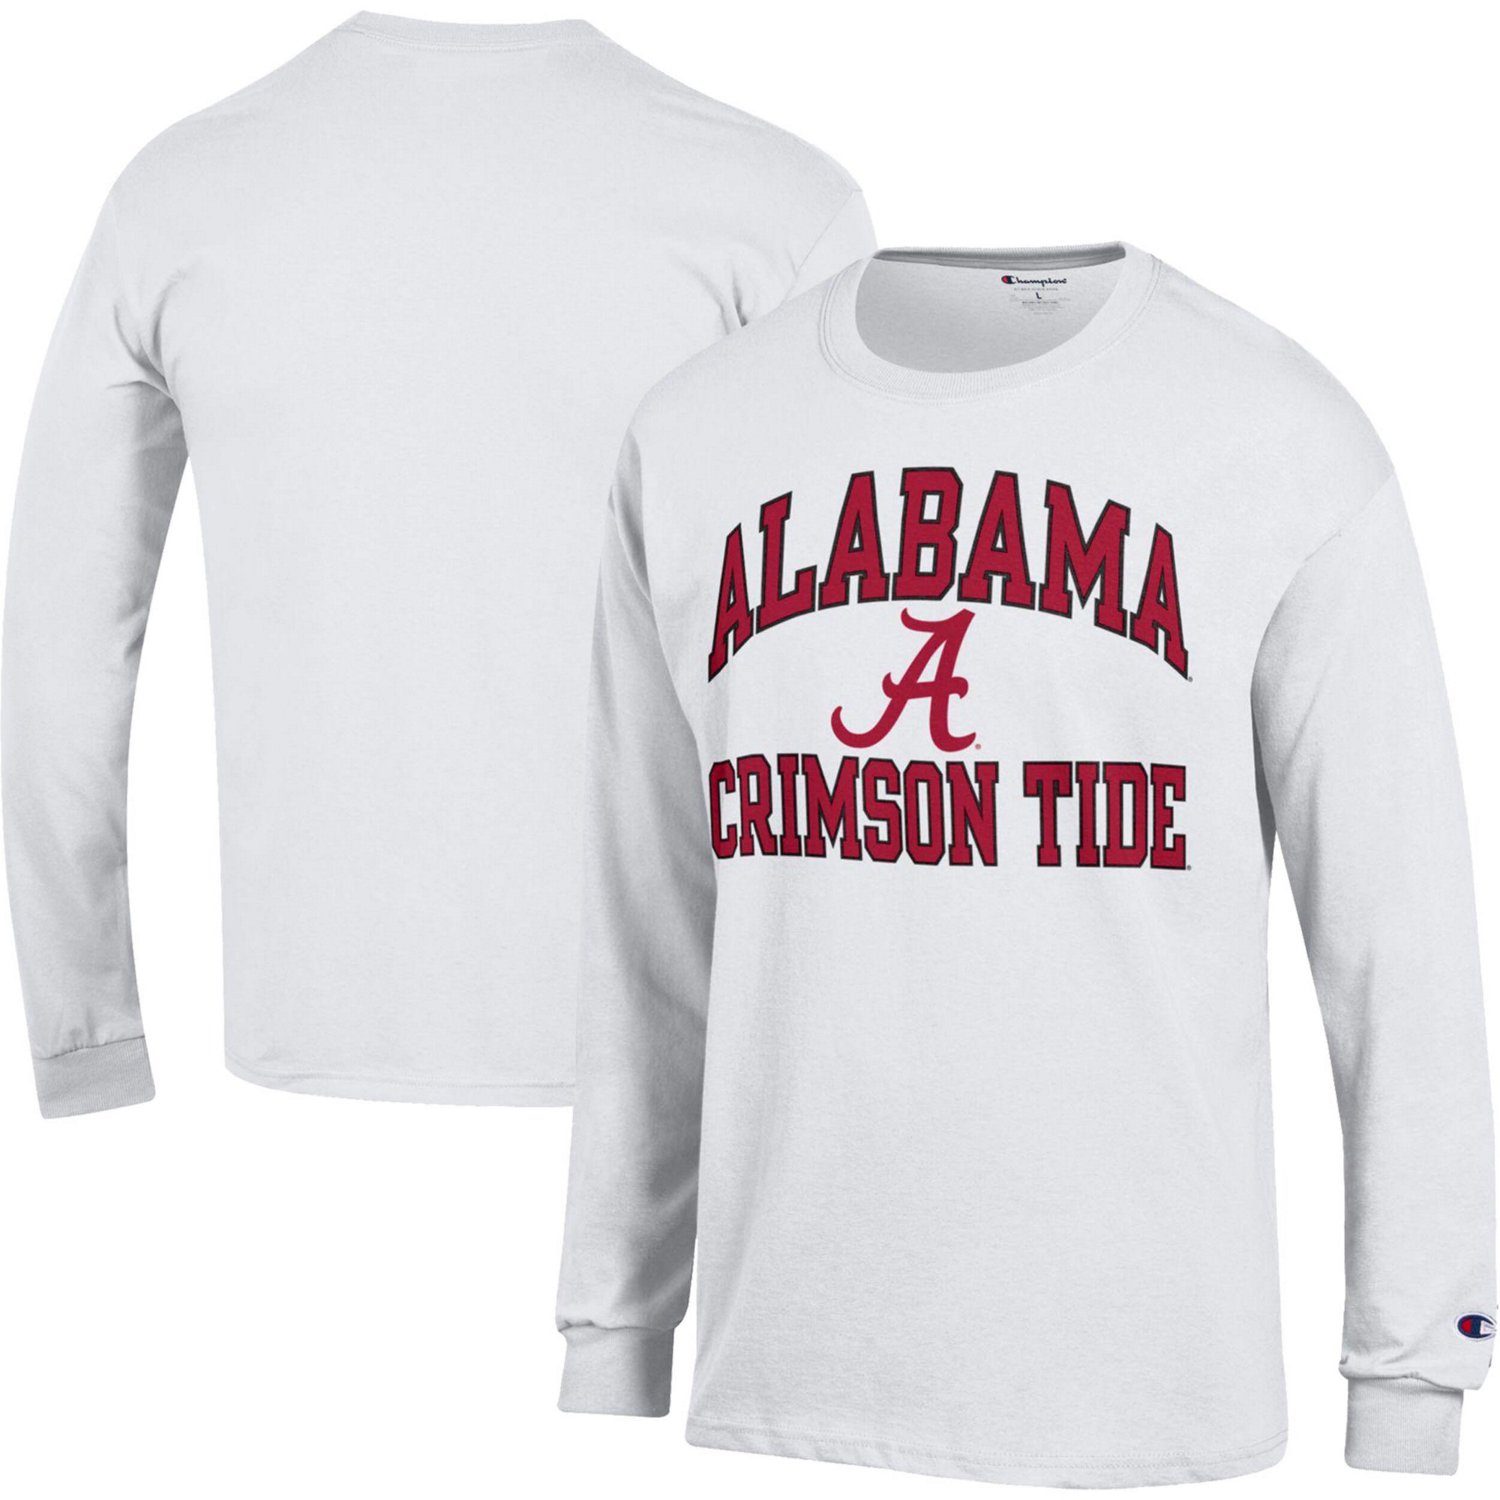 Alabama Crimson Tide golf MVP jersey